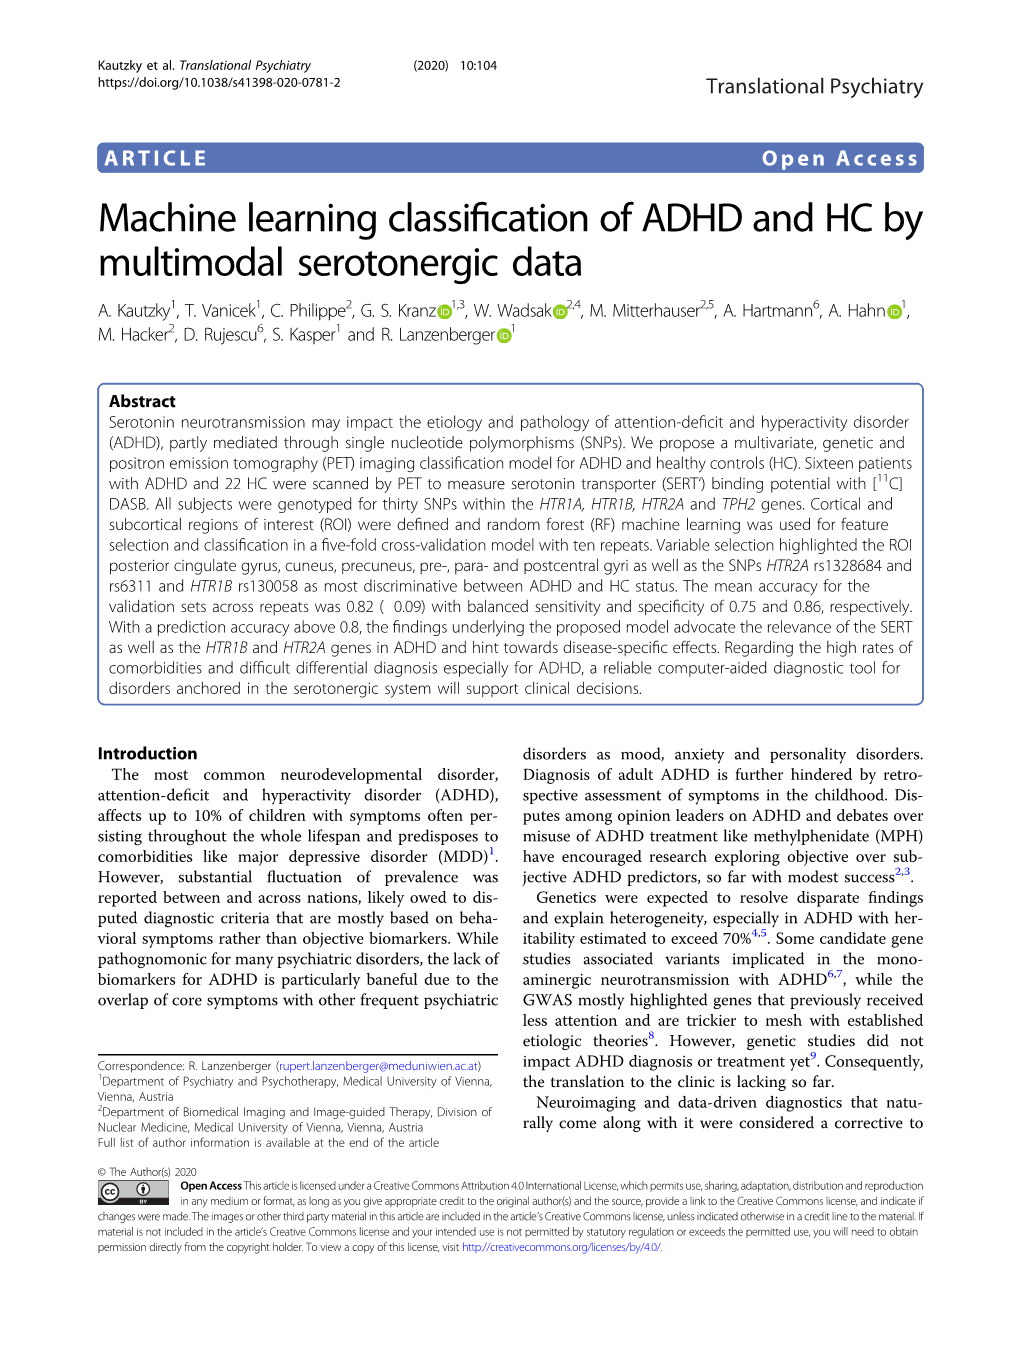 Machine Learning Classification of ADHD and HC by Multimodal Serotonergic Data